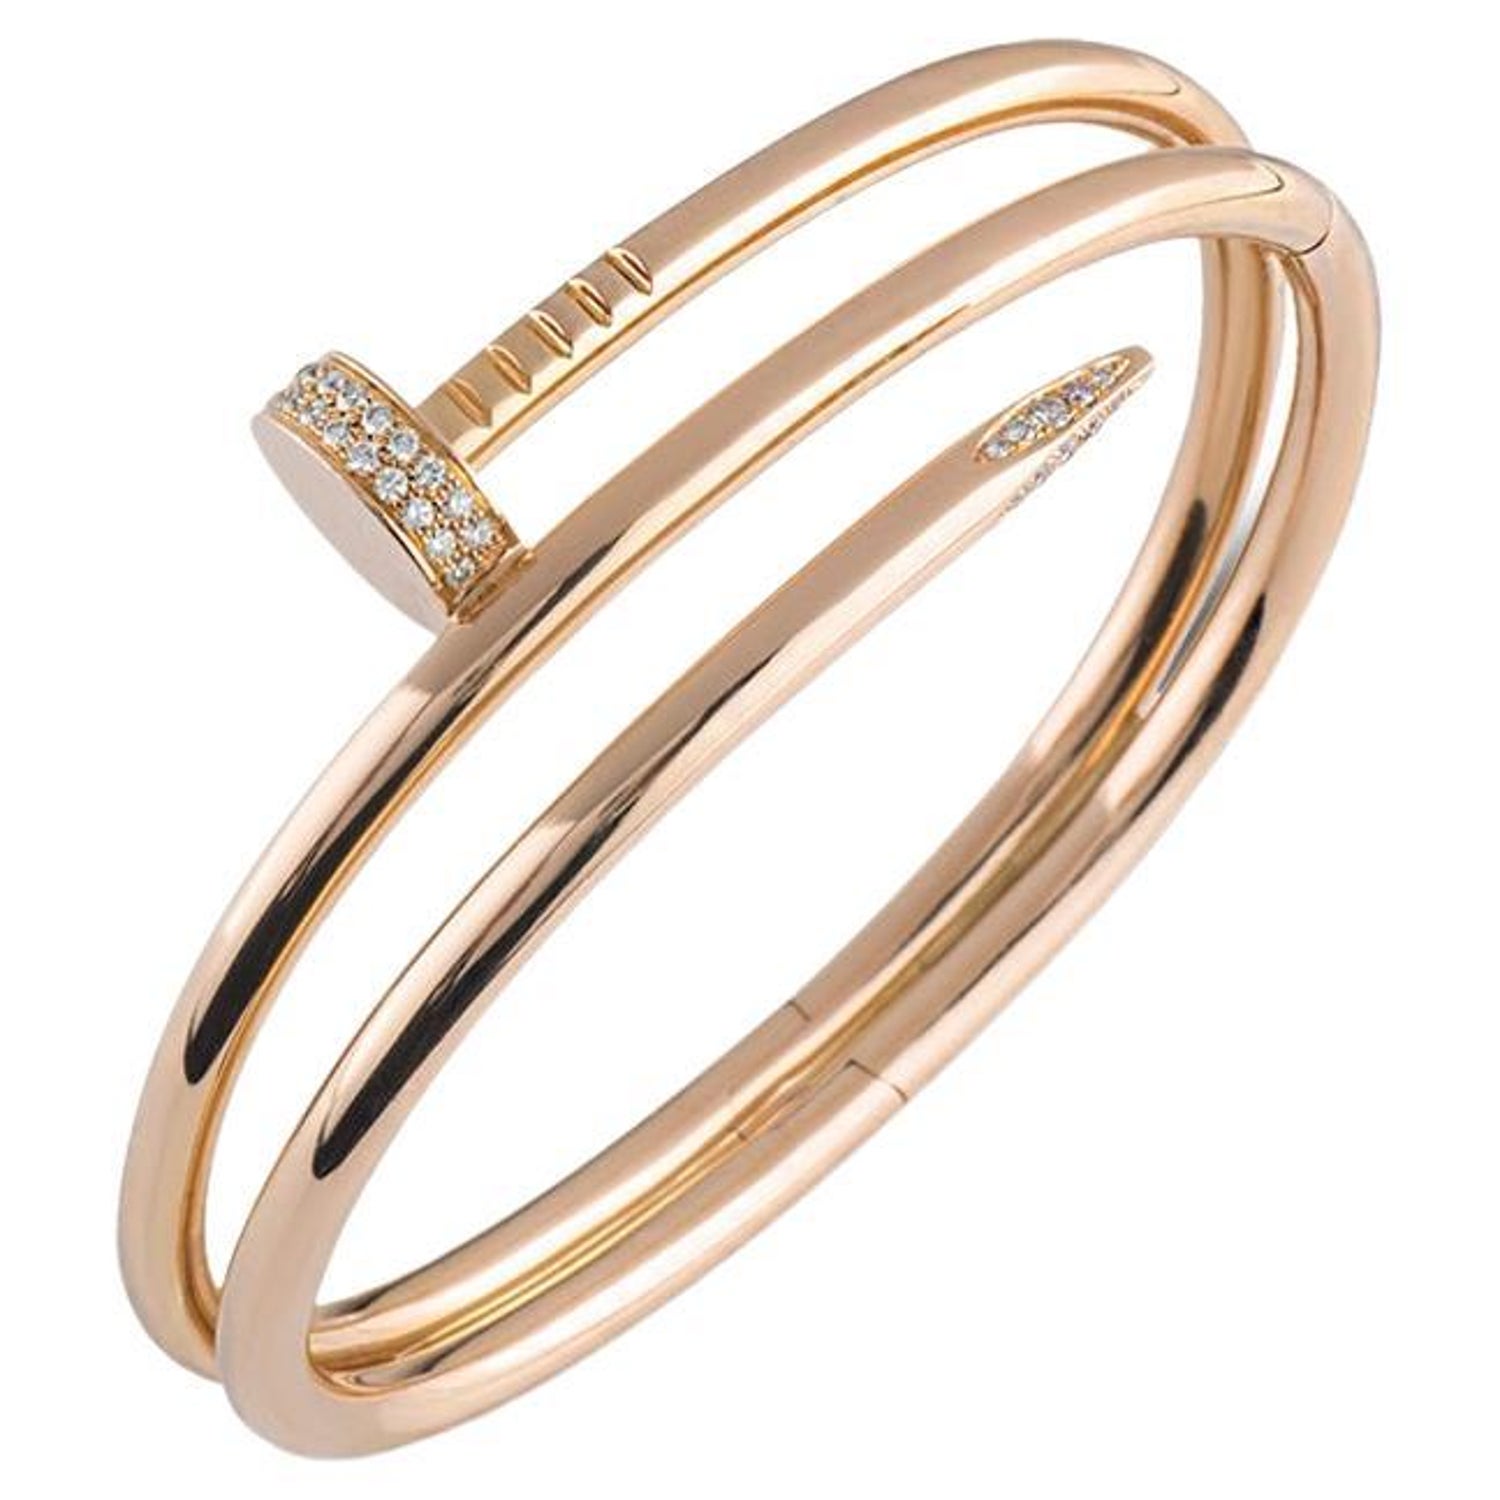 CRN6702117 - Juste un Clou bracelet - Pink gold, diamonds - Cartier